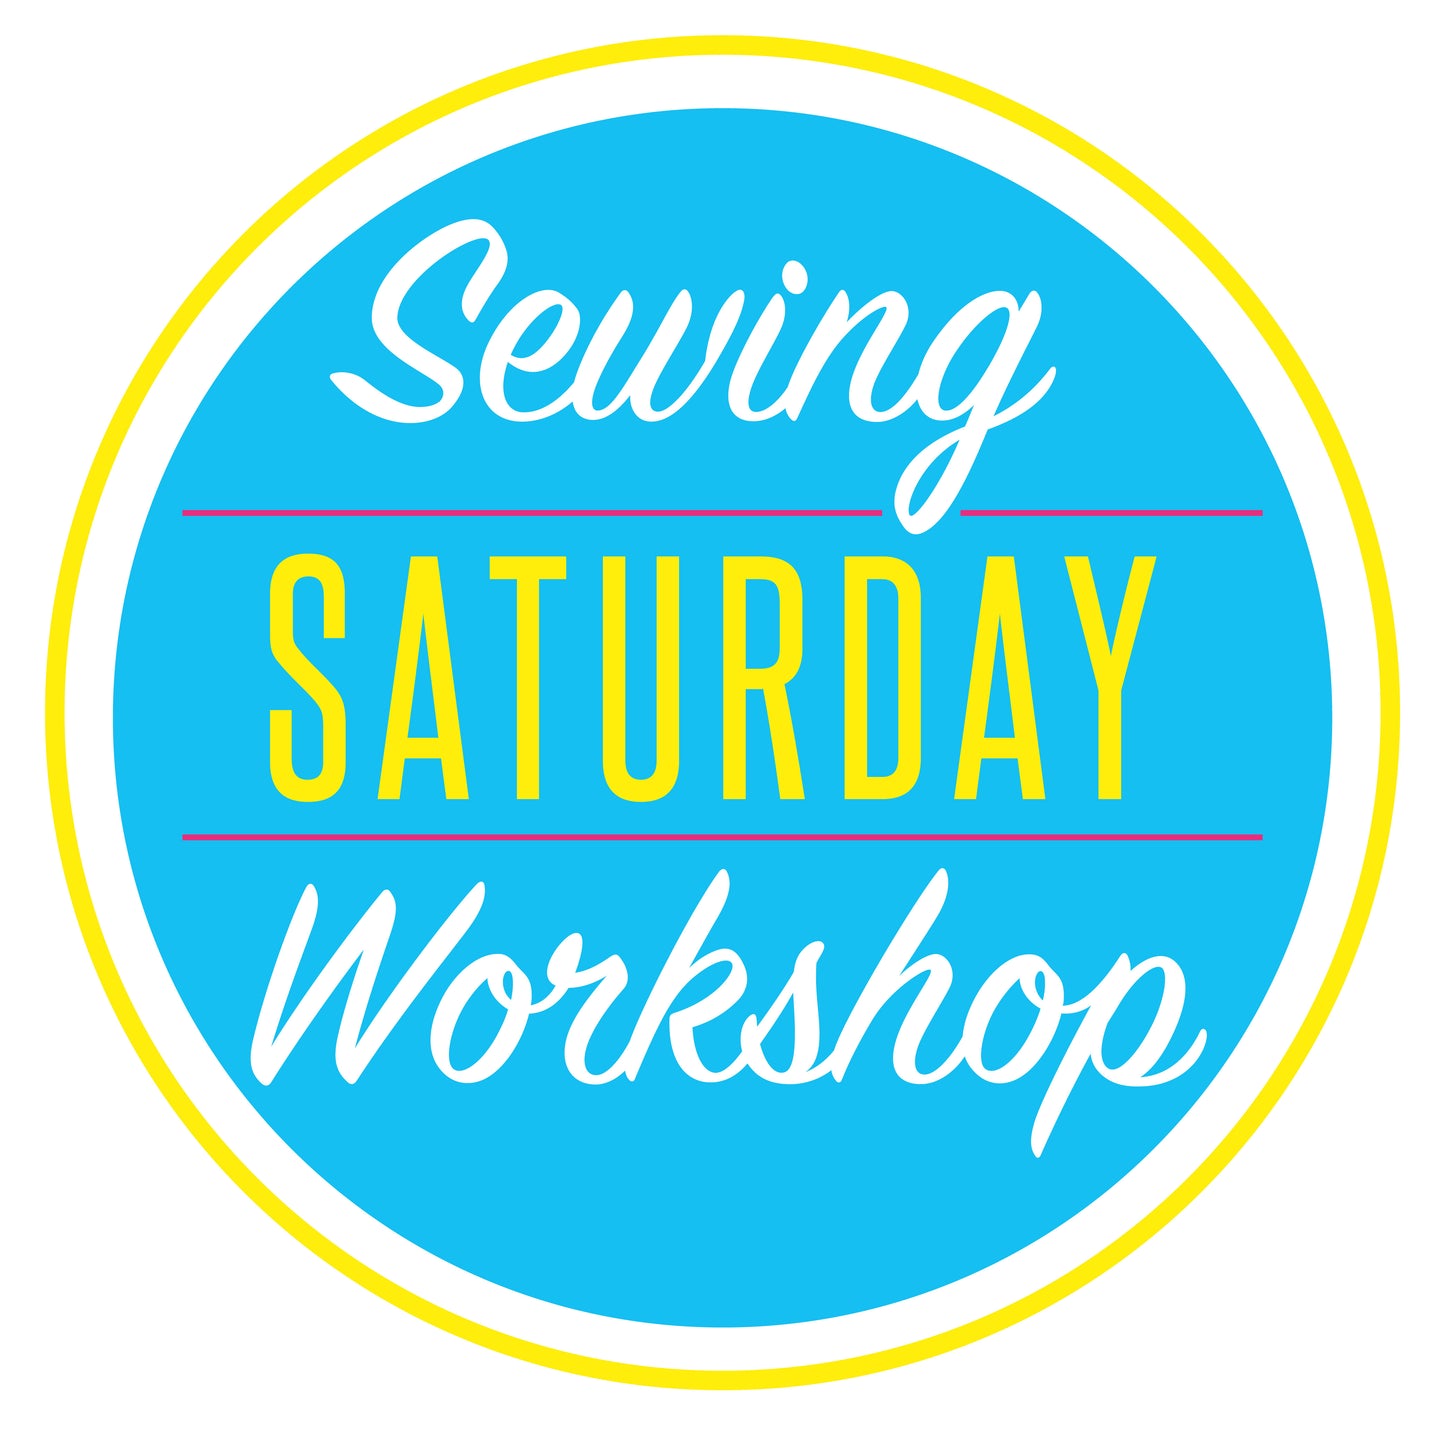 Sewing Workshop: Saturday, June 8, 9am-3pm